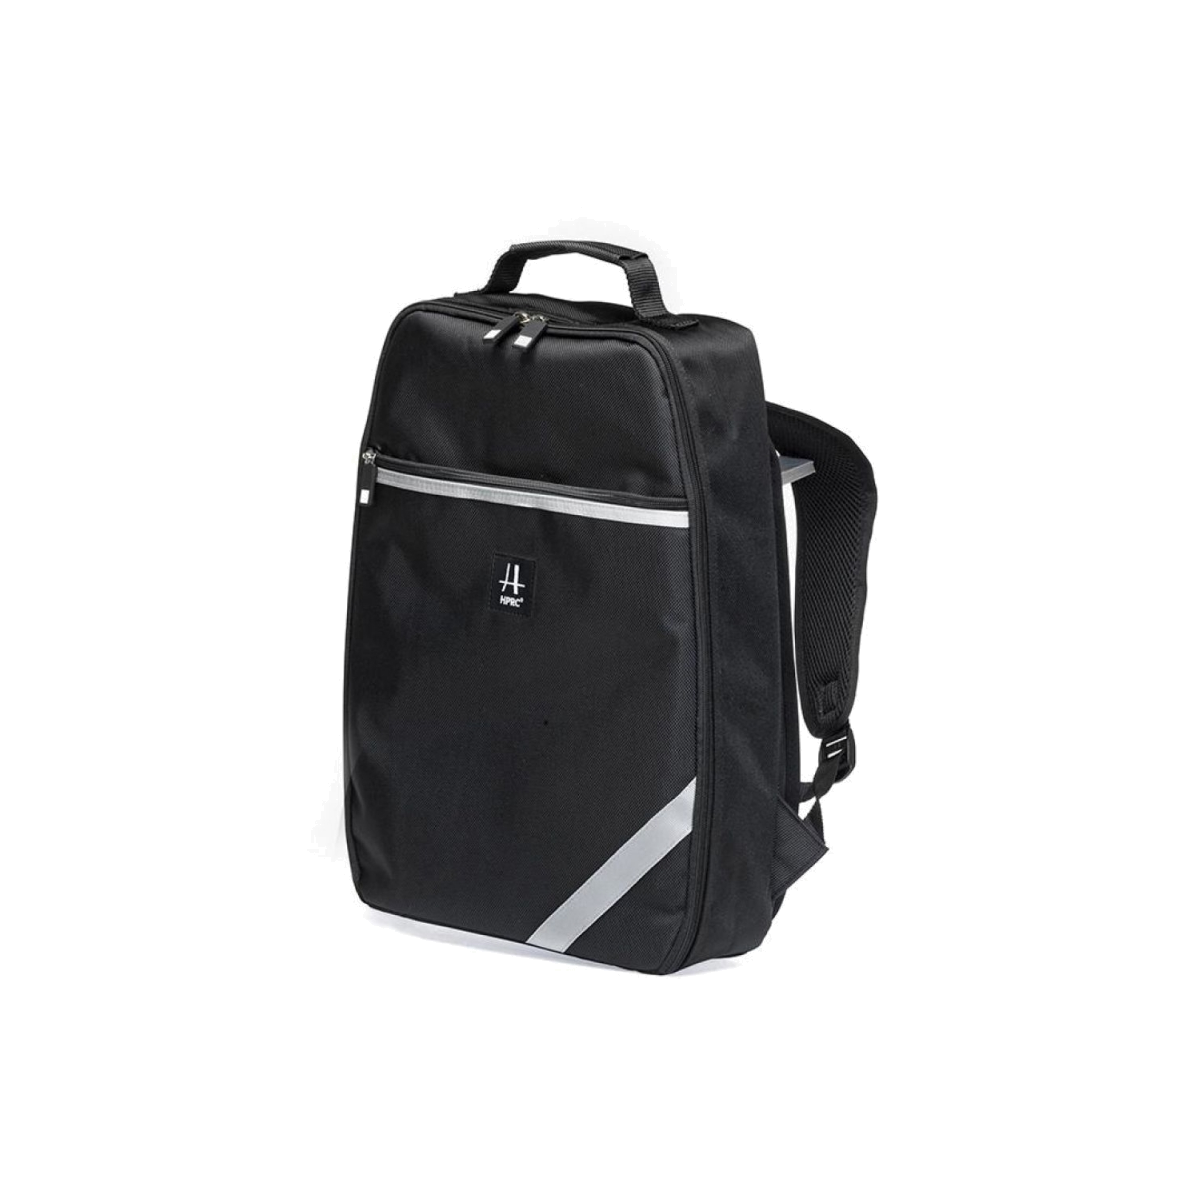 HPRC Mavic 3 - Soft Backpack